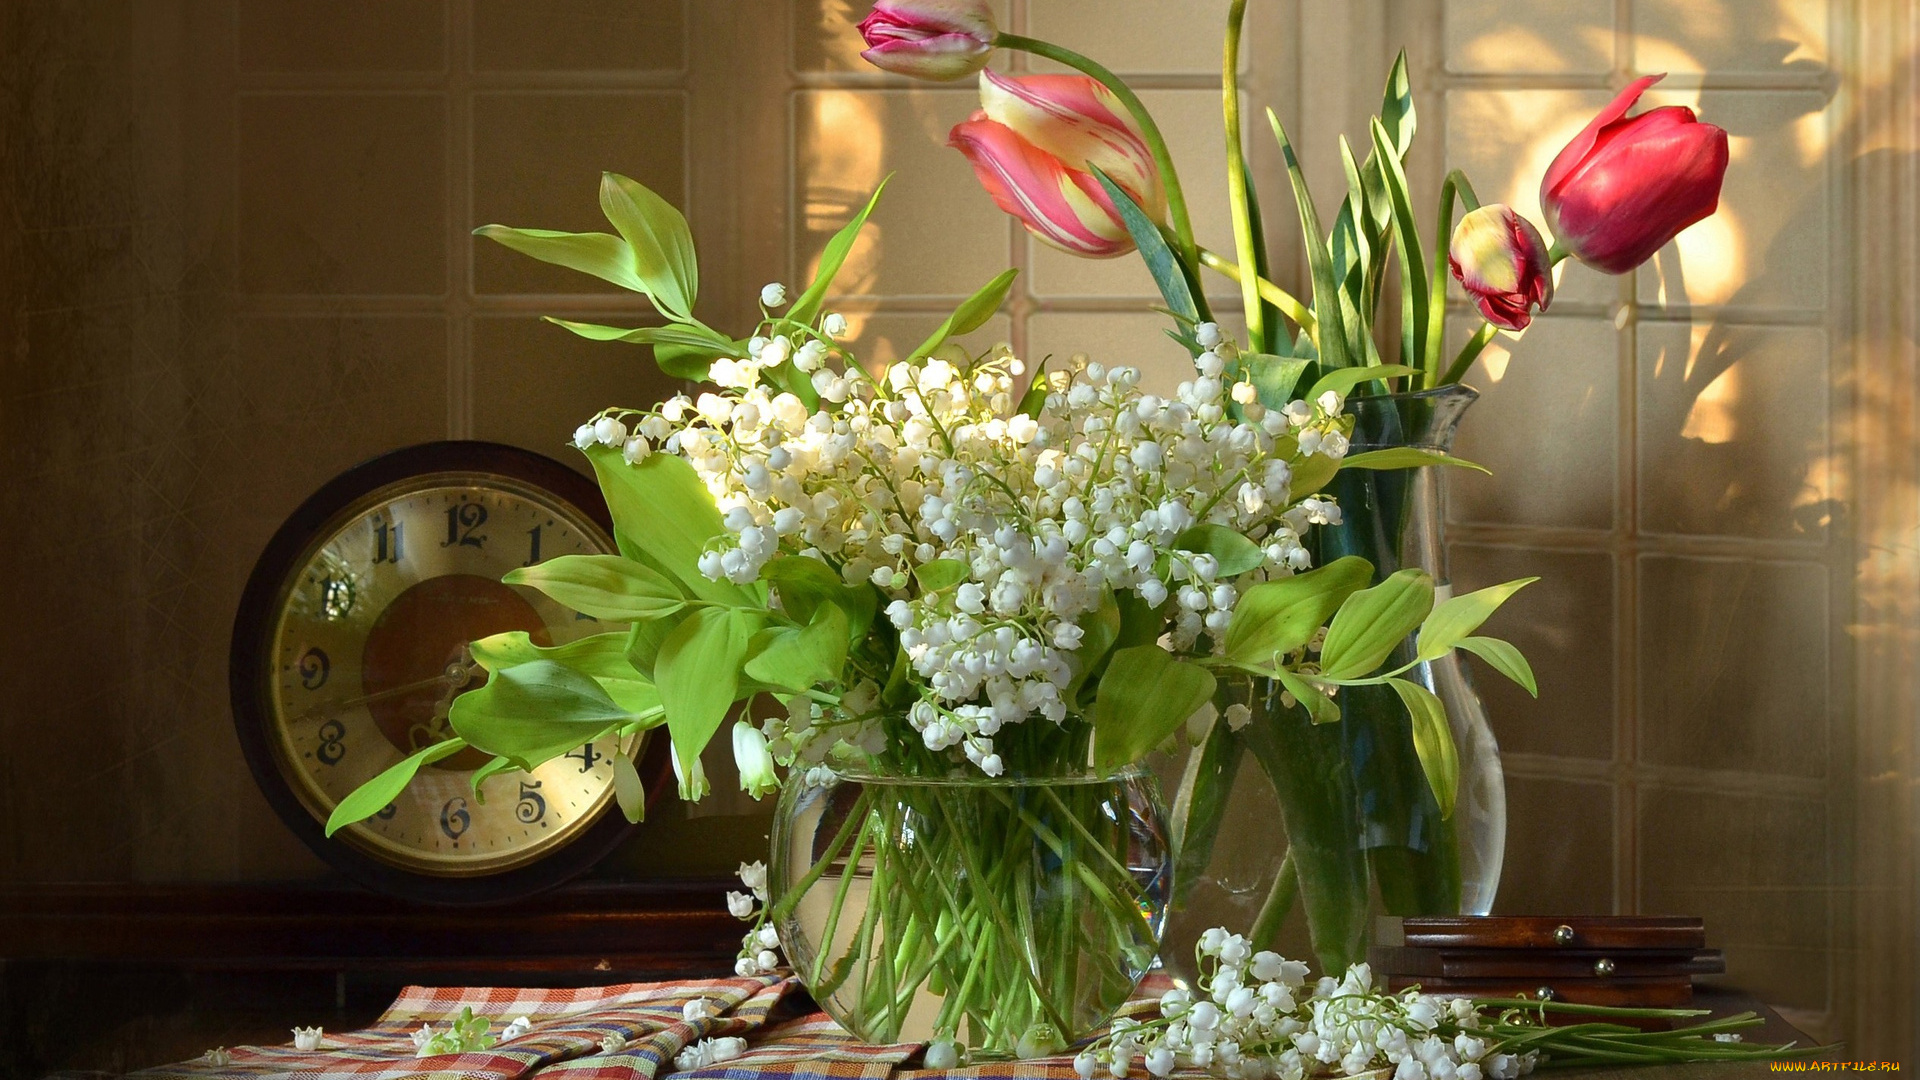 цветы, разные, вместе, столик, ваза, ландыши, тюльпаны, тени, кувшин, часы